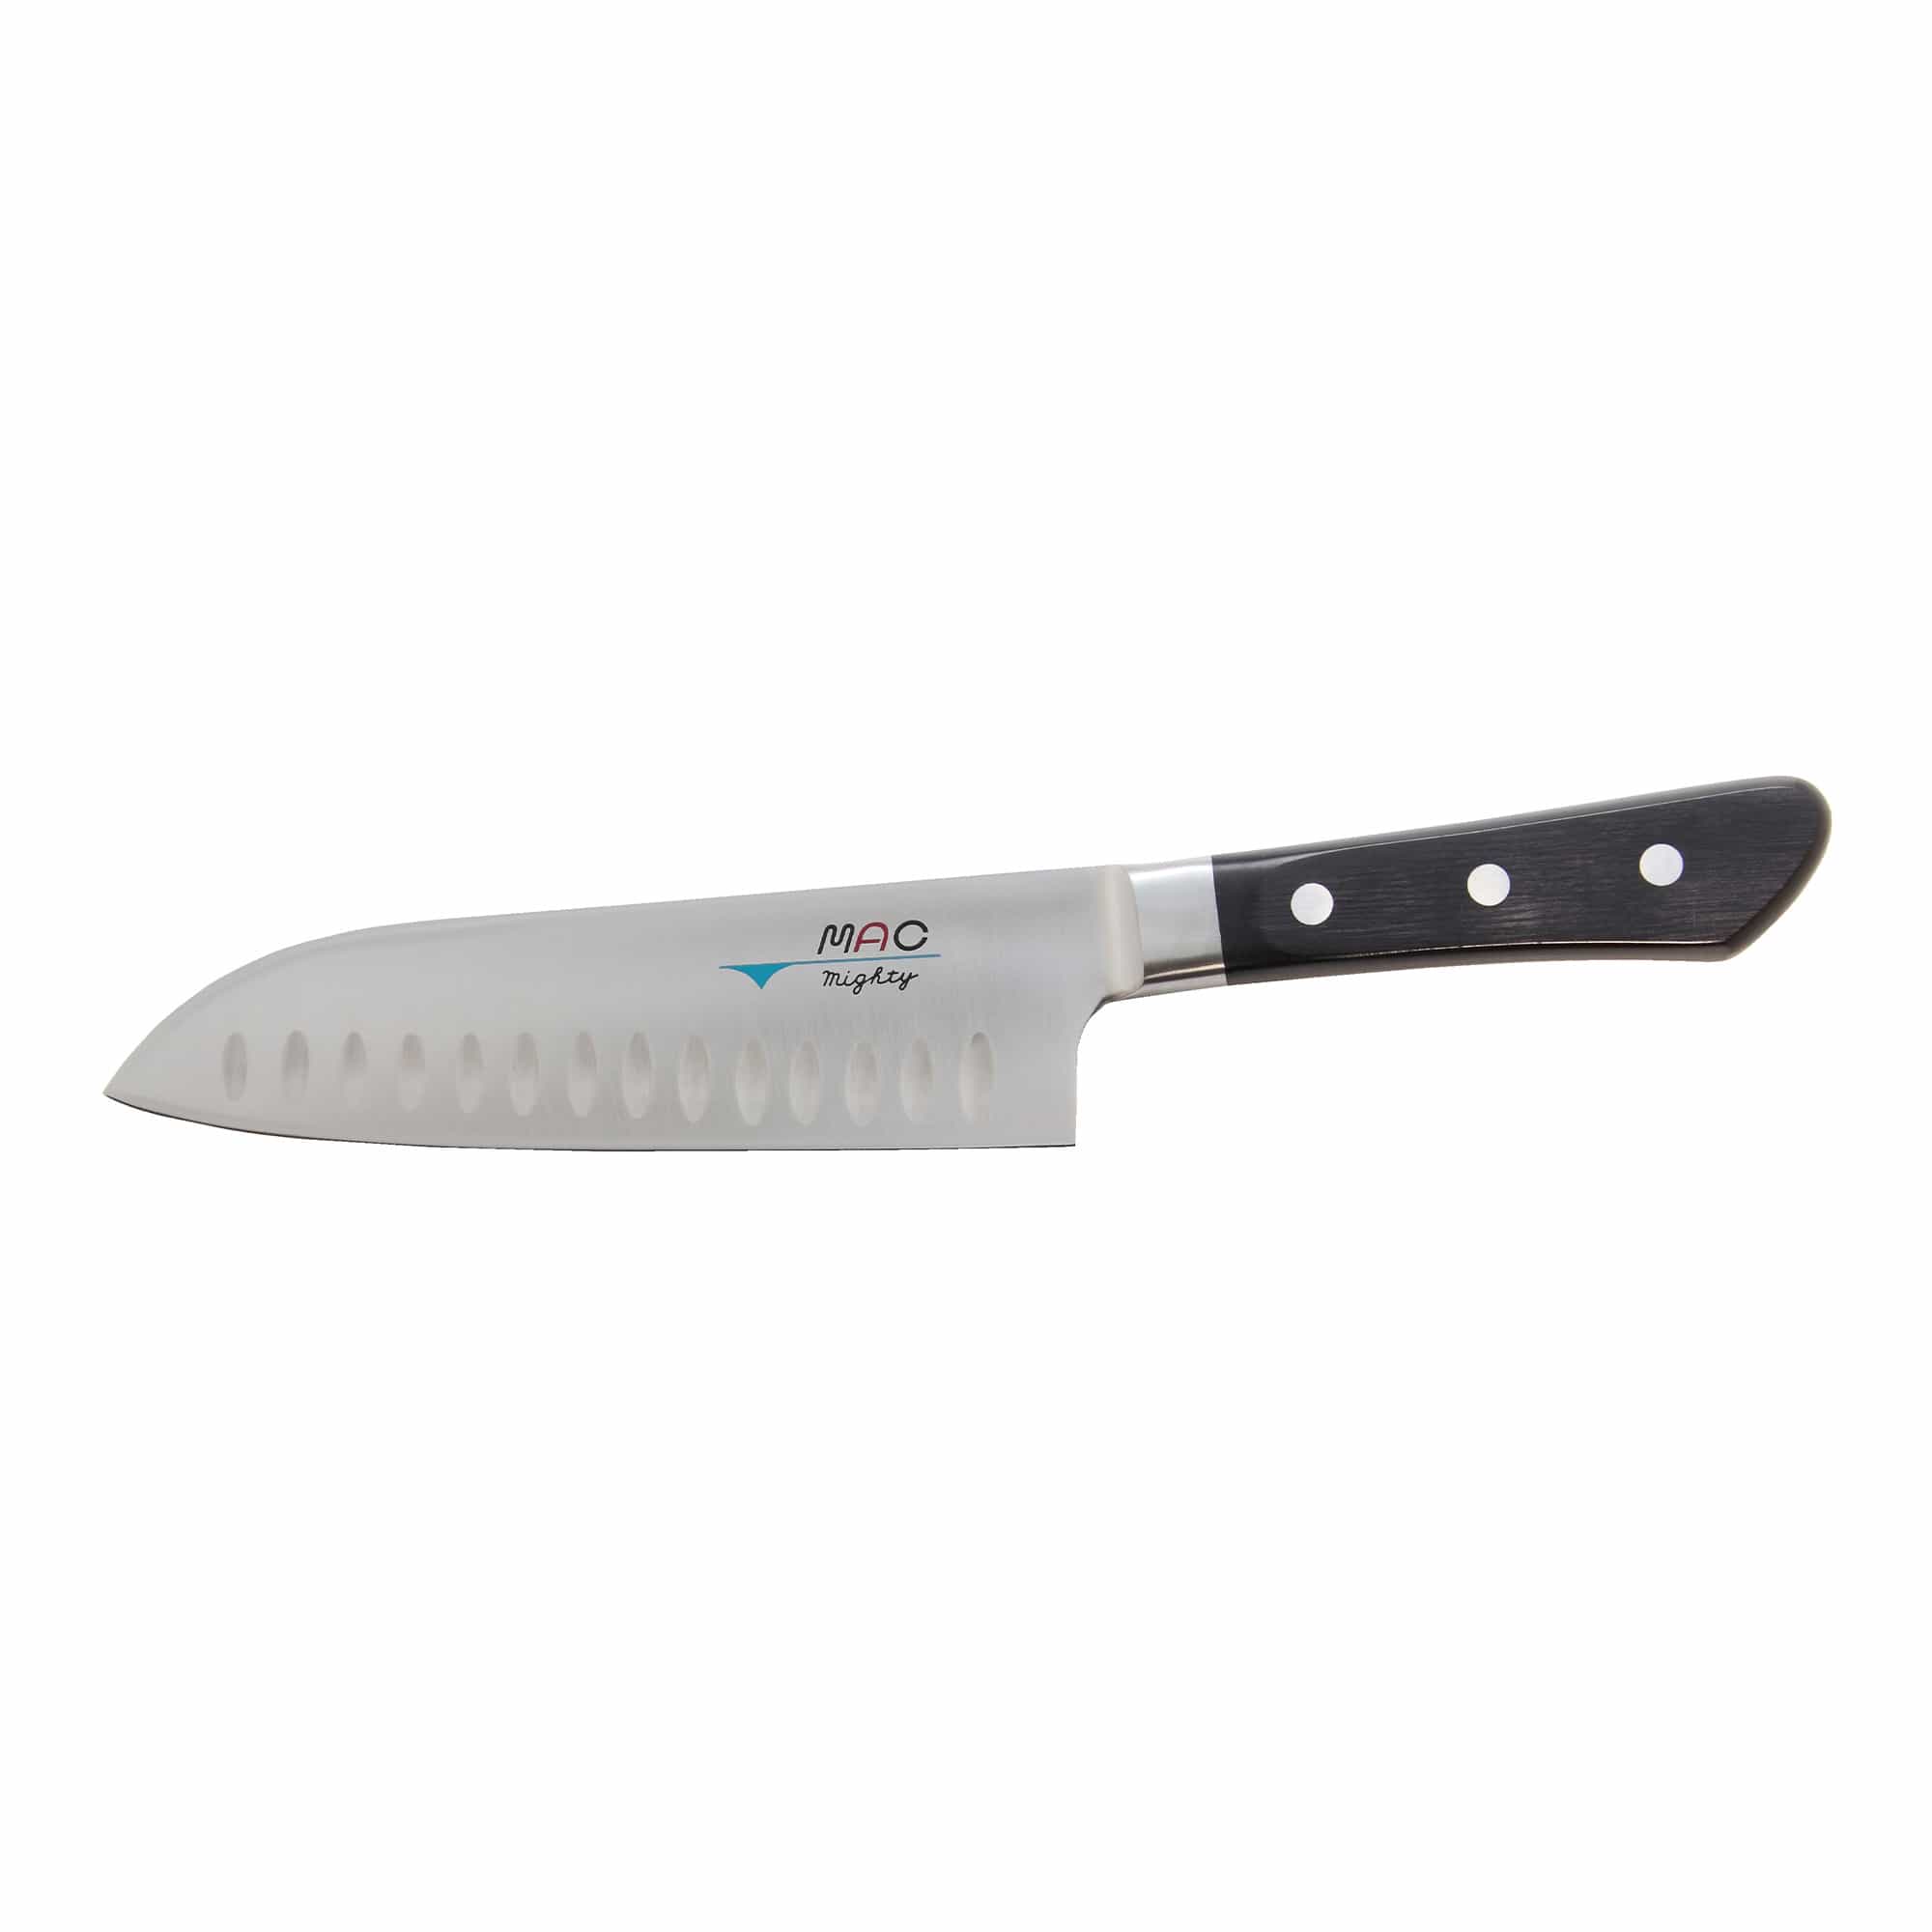 Mighty - Kokkekniv med luftspalte, 17 cm